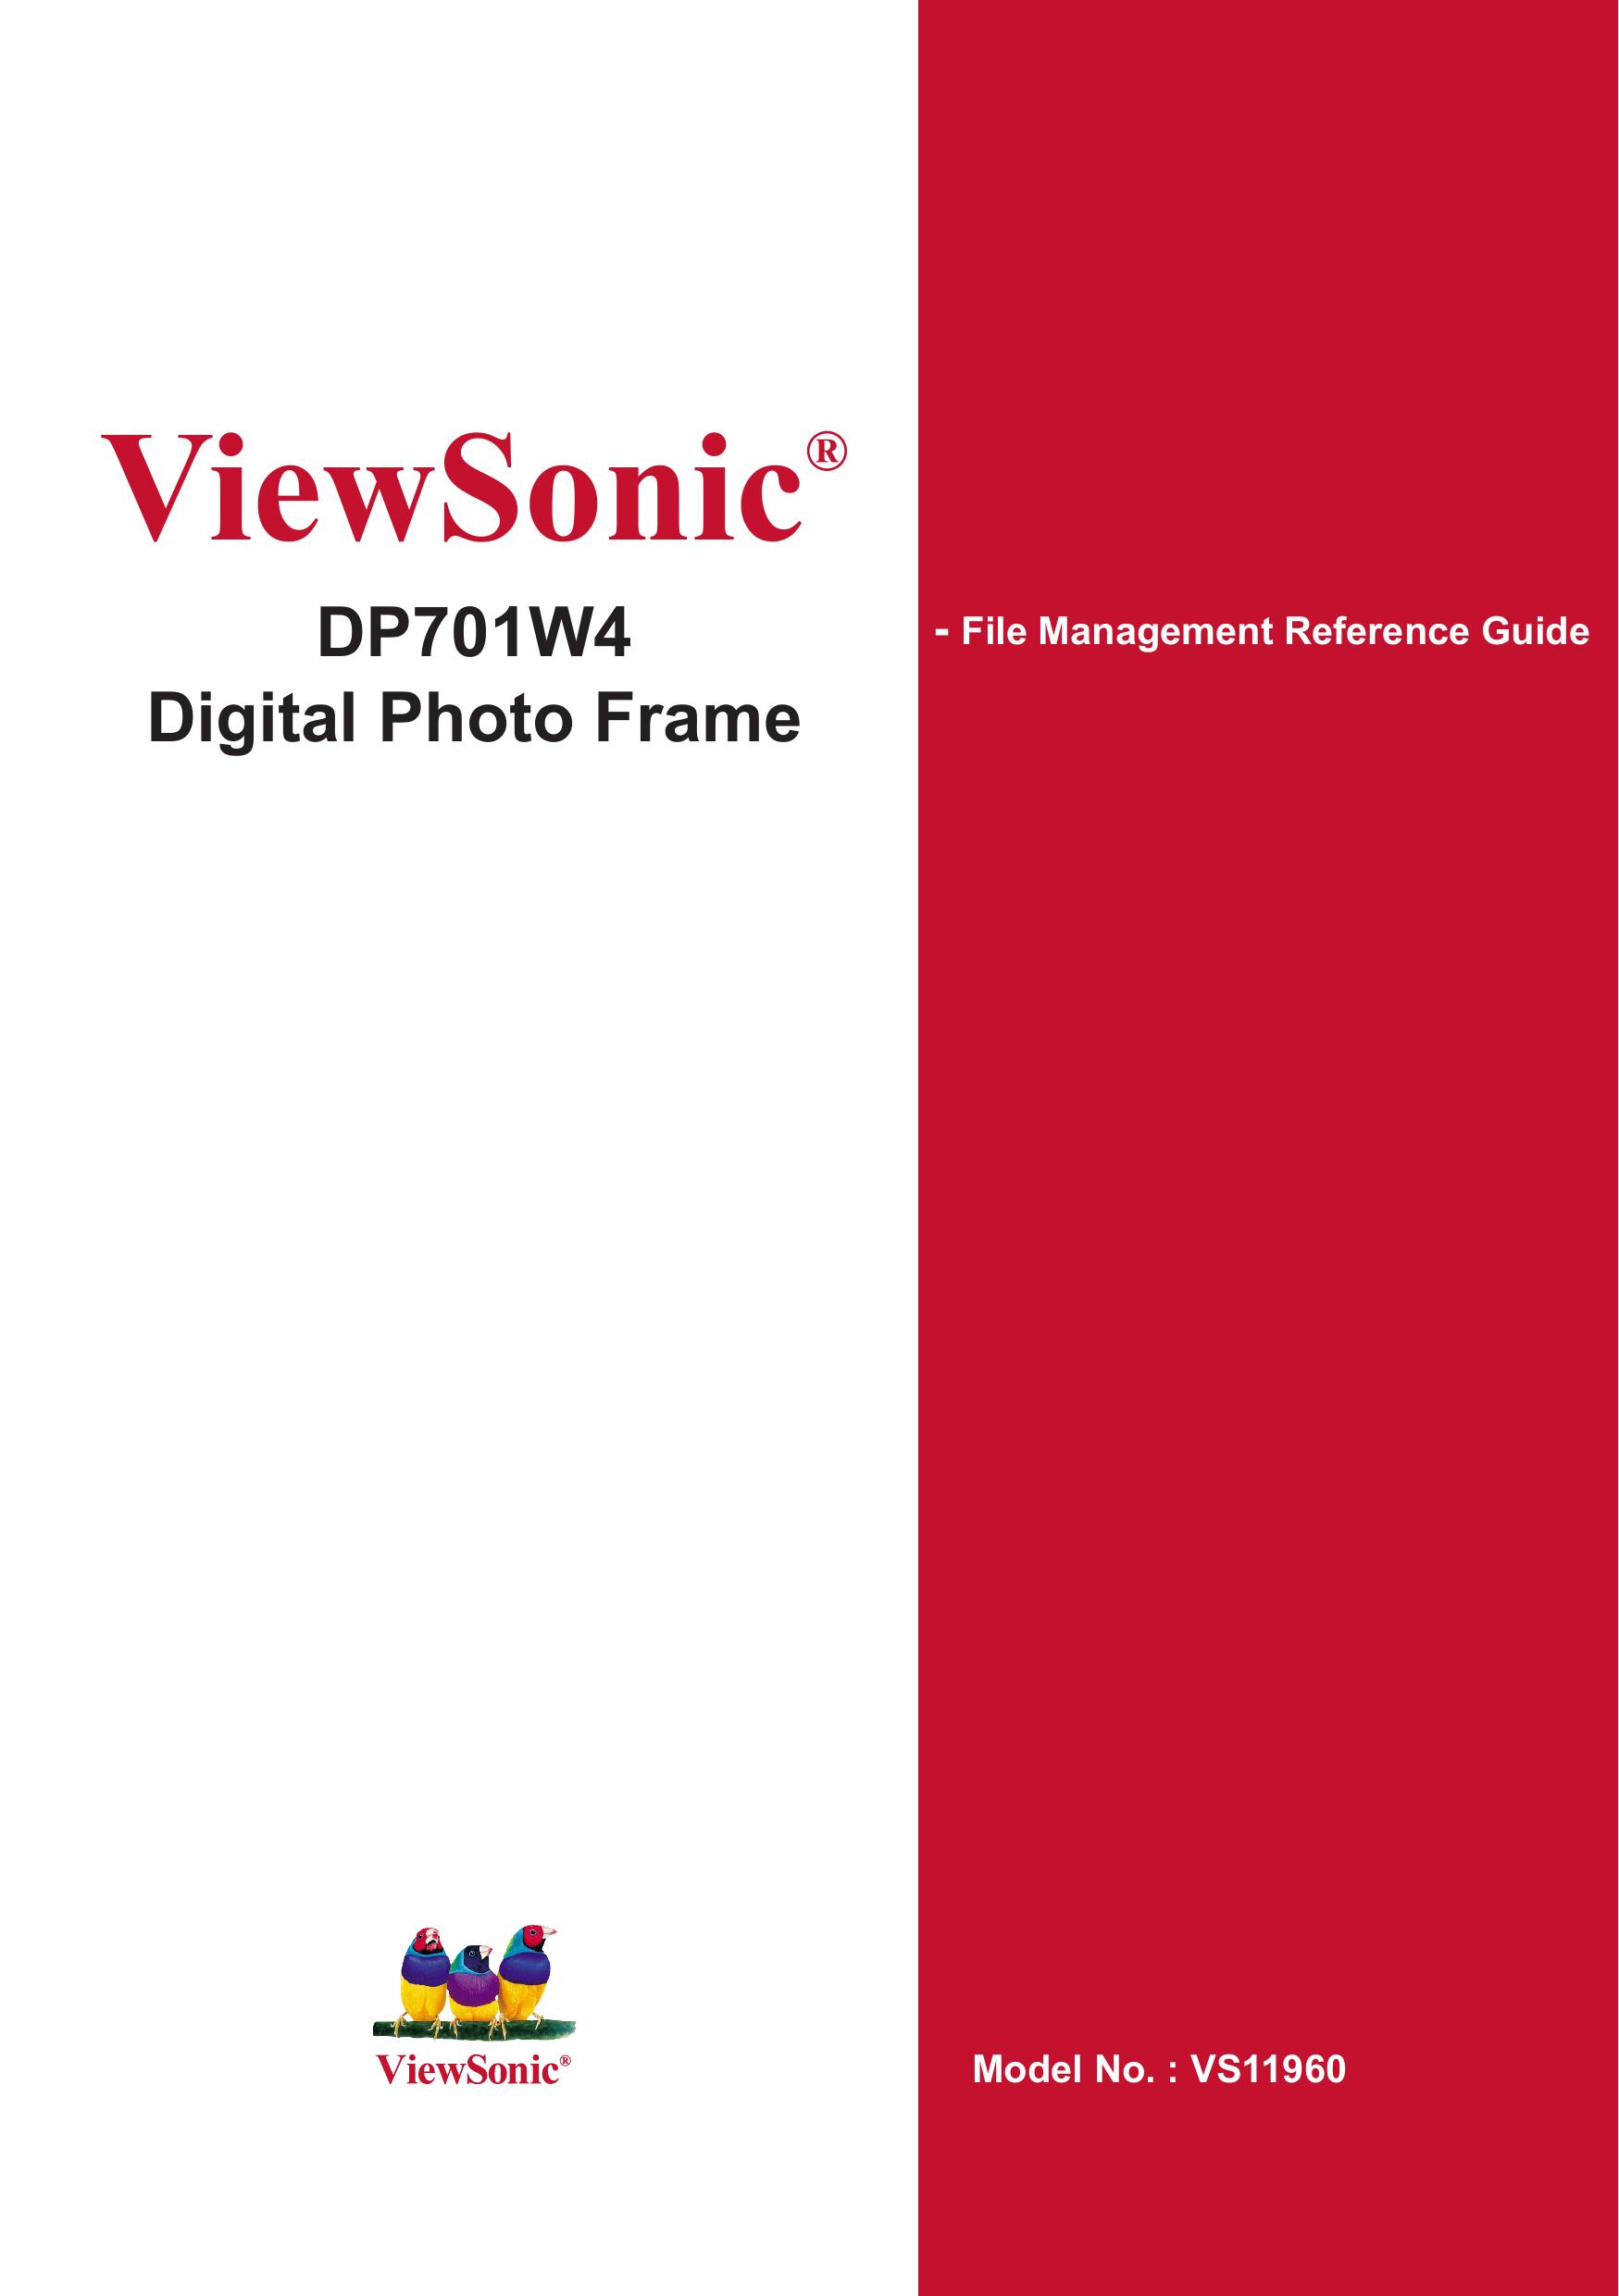 ViewSonic DP701W4 Digital Photo Frame User Manual